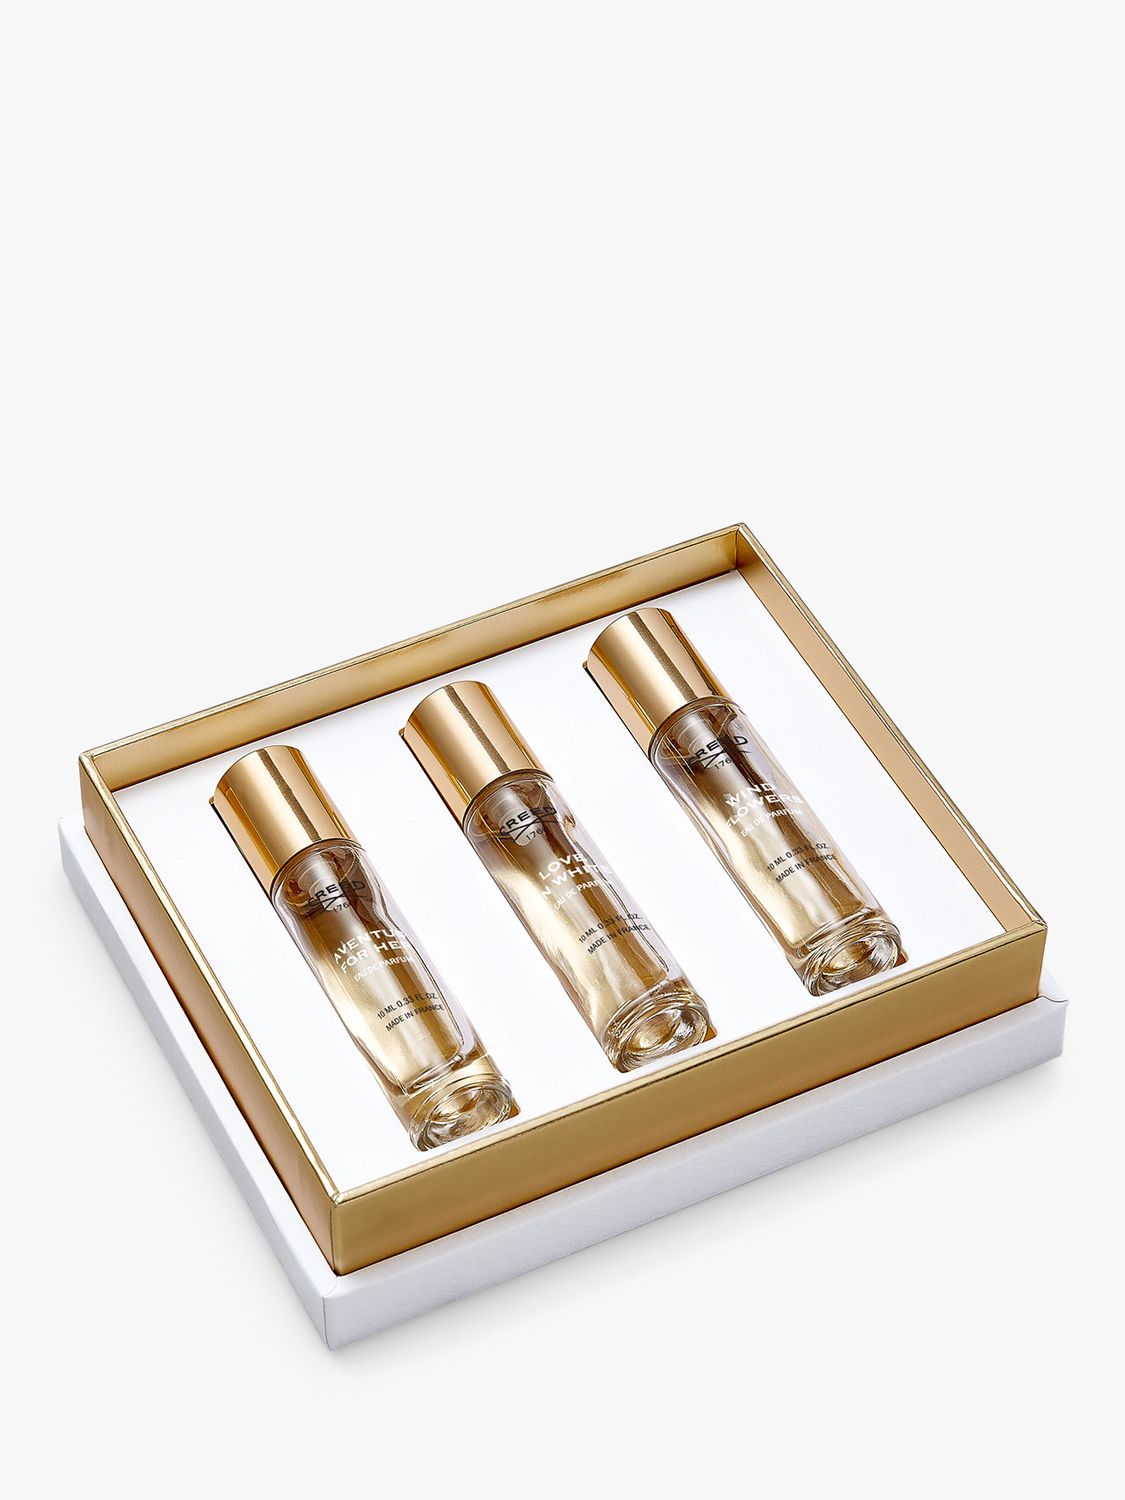 CREED For Her Eau de Parfum Fragrance Gift Set, 3 x 10ml